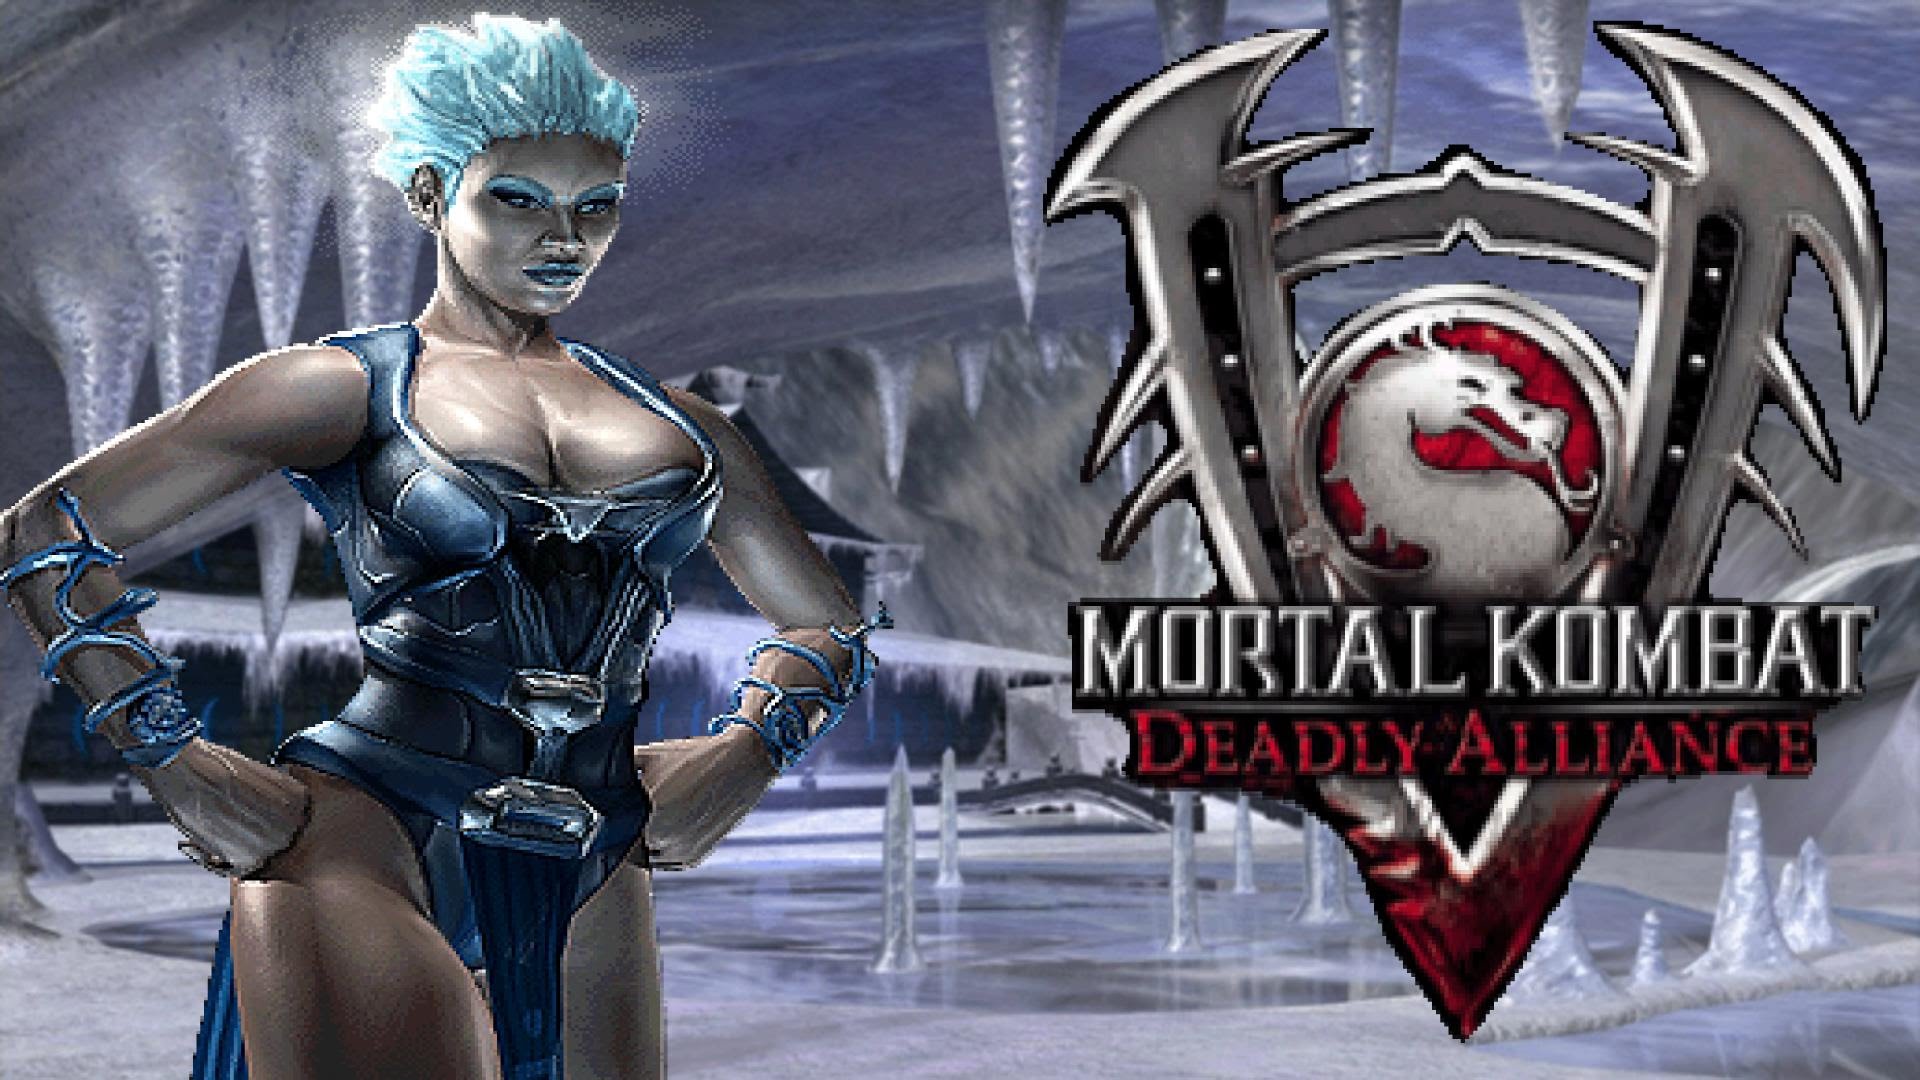 Mortal Kombat Deadly Alliance - Konquest Mode - Part 10 - Frost ...